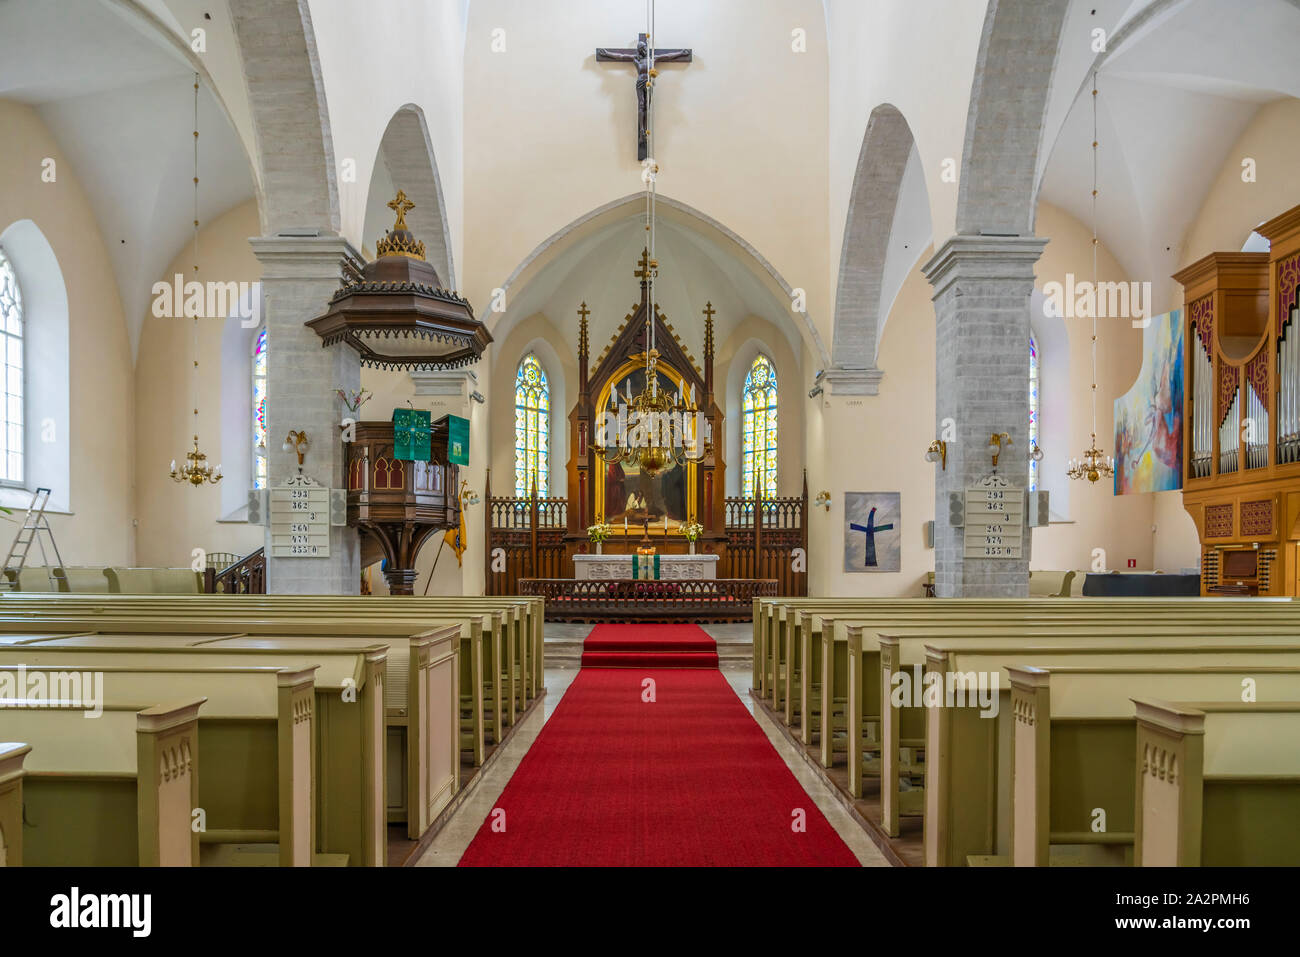 Das Innere der St. John's Church in Tallinn, Estland. Stockfoto